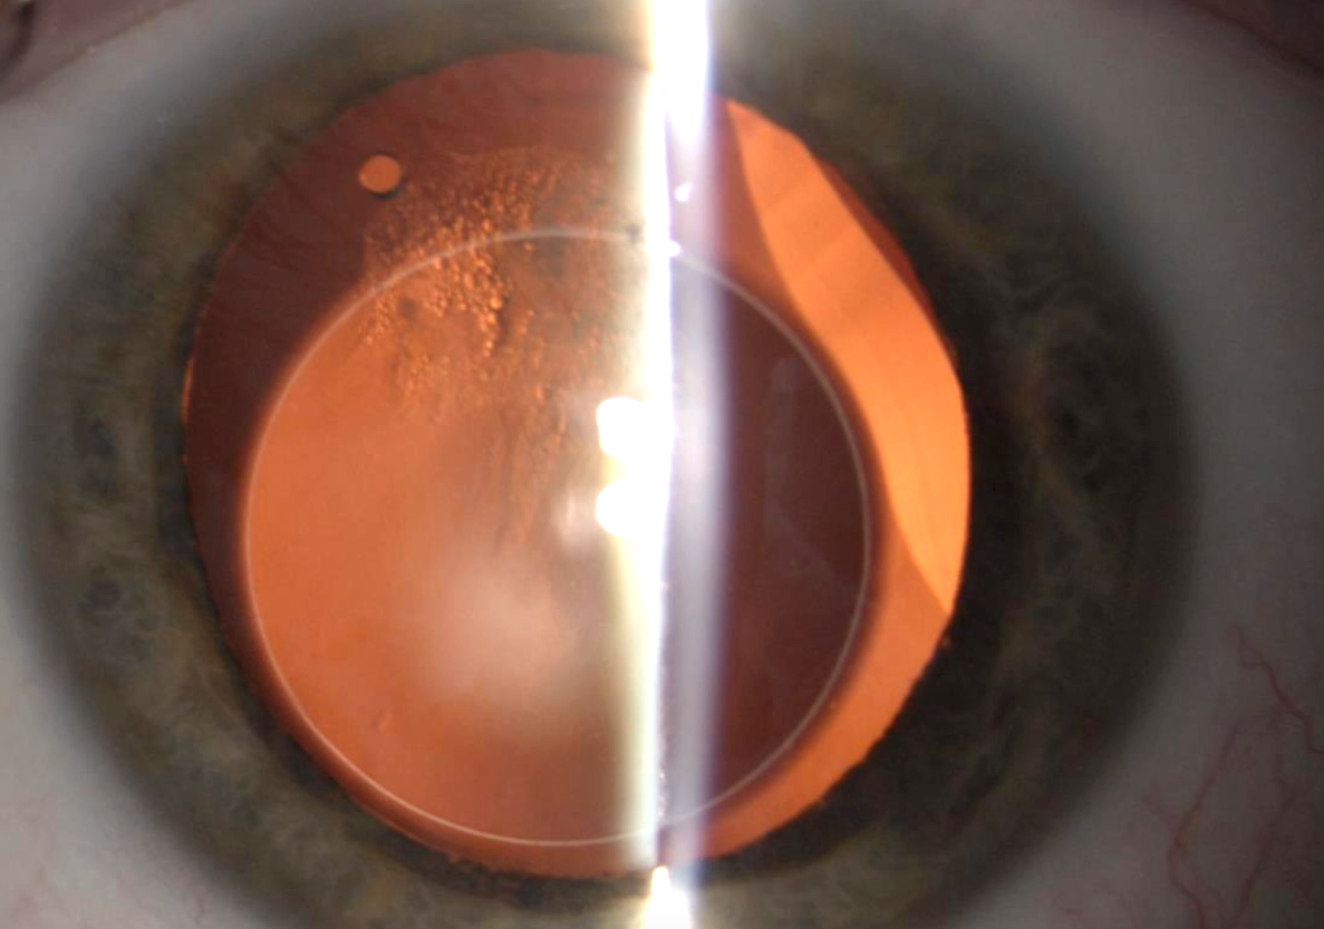 Insights on laser cataract surgery